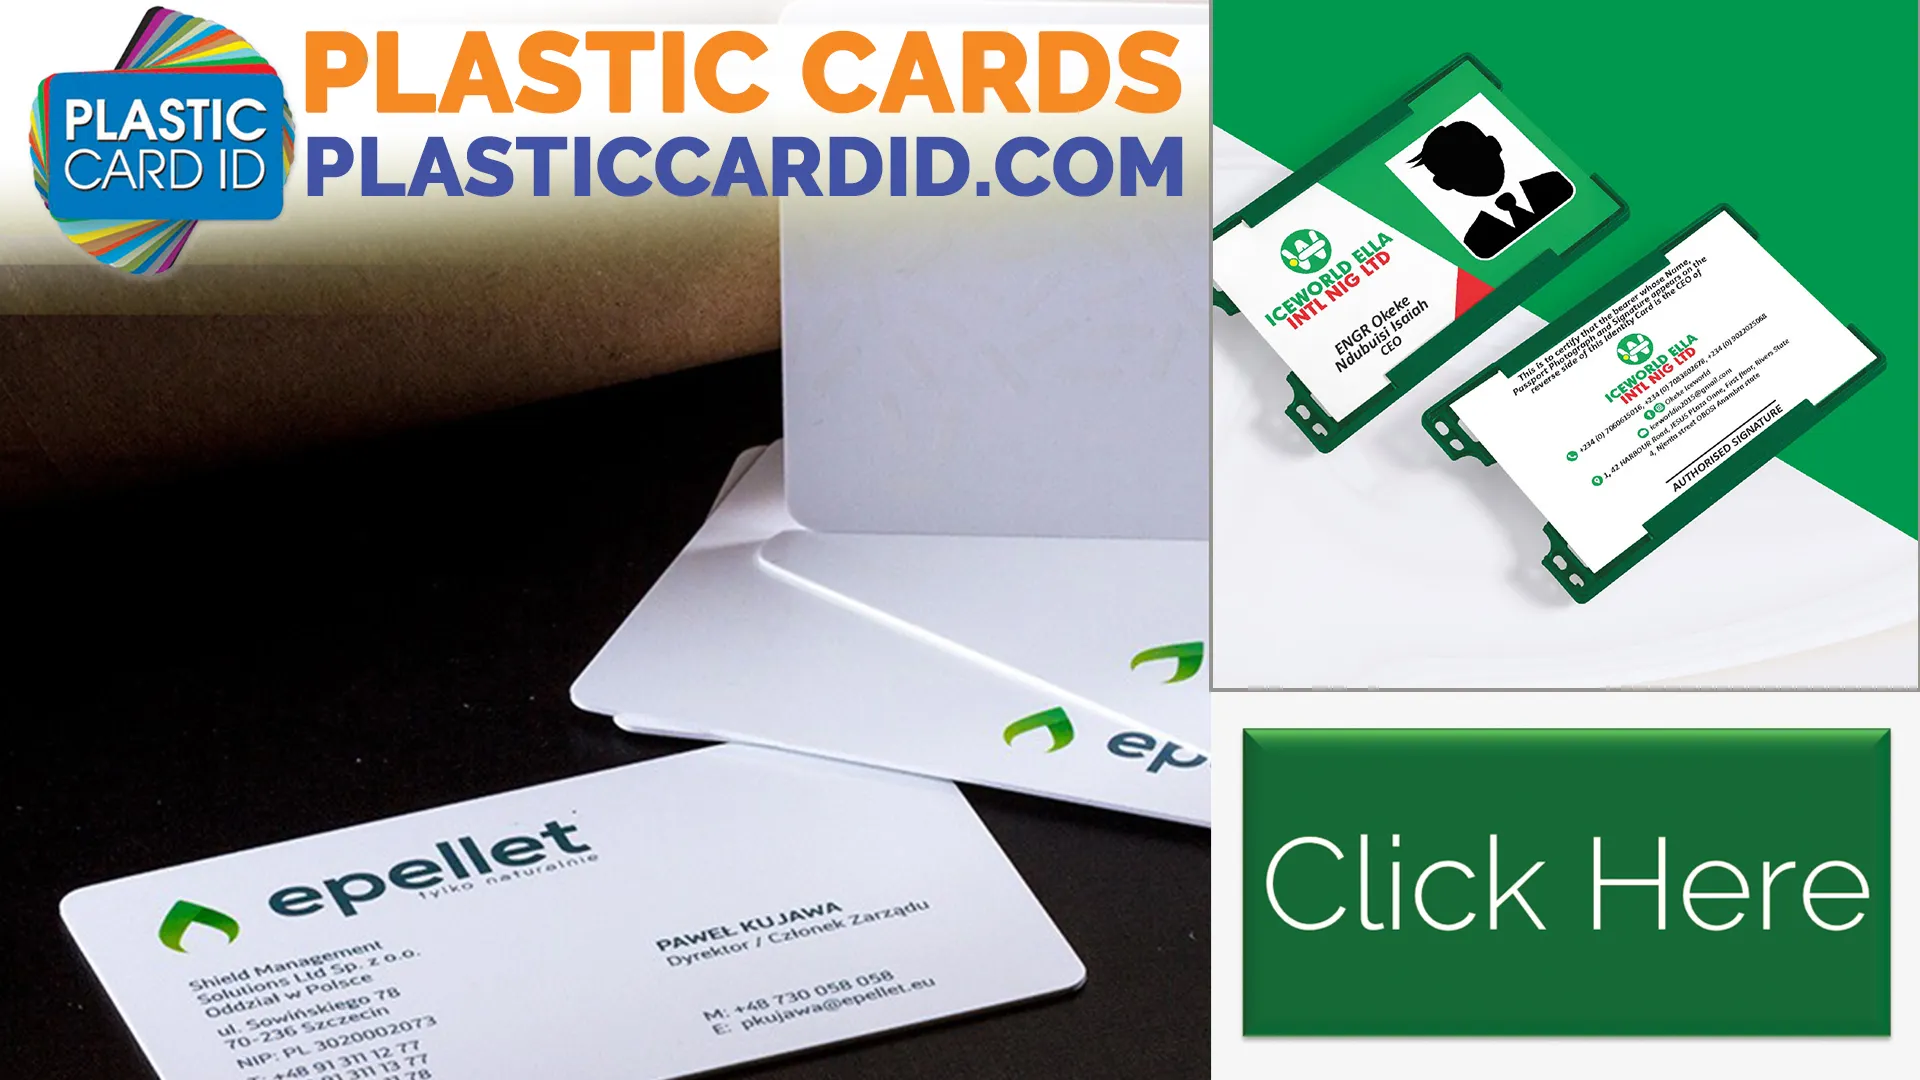 Plastic Card Applications That Shine